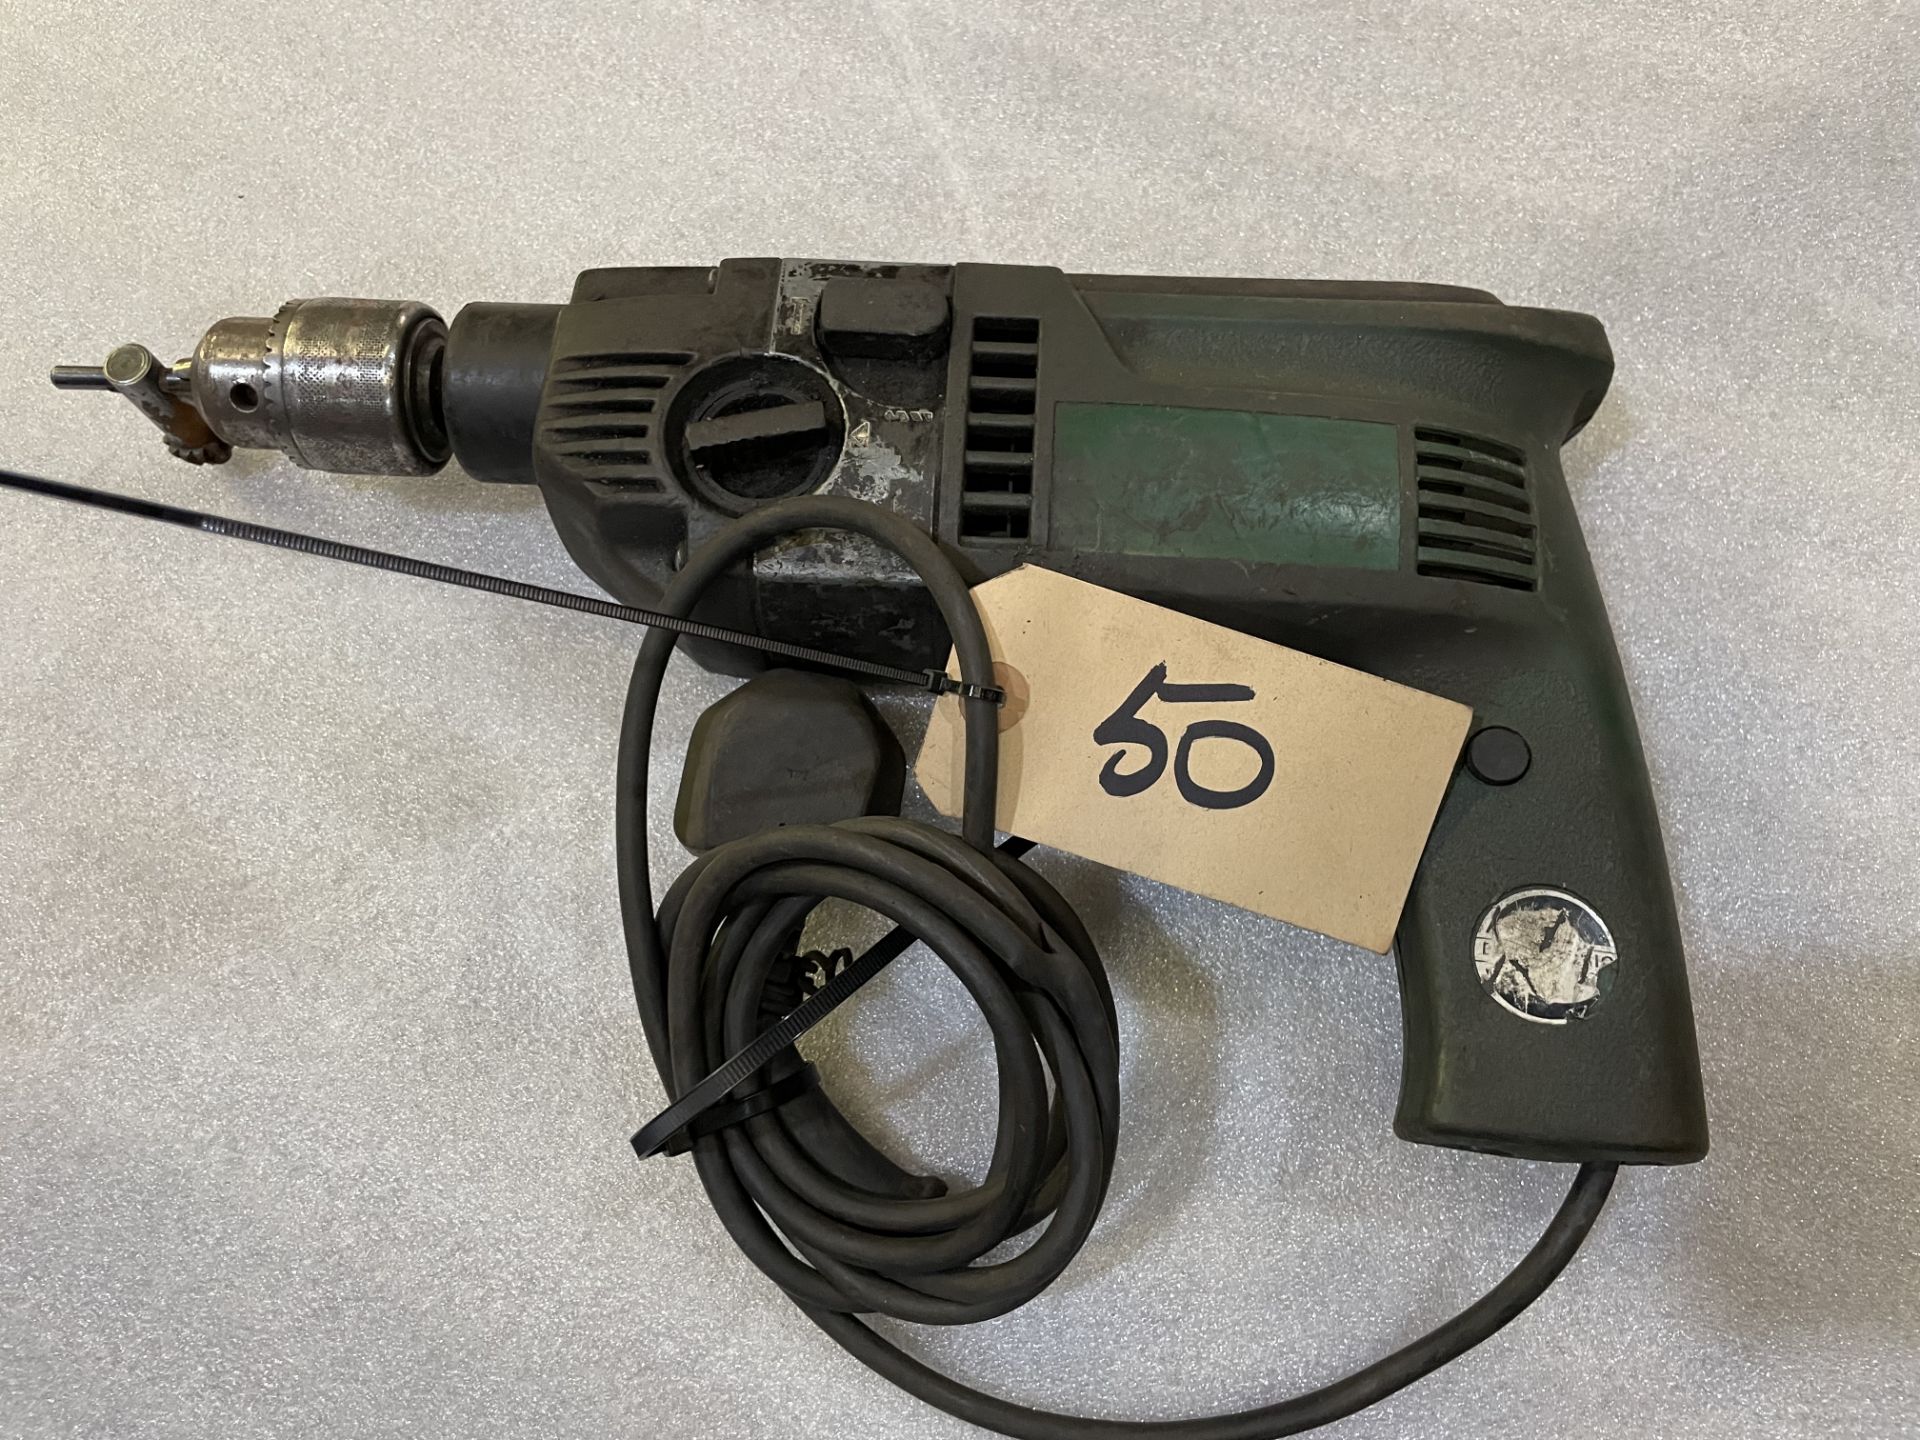 A Heavy Duty Electric Drill, 240v.